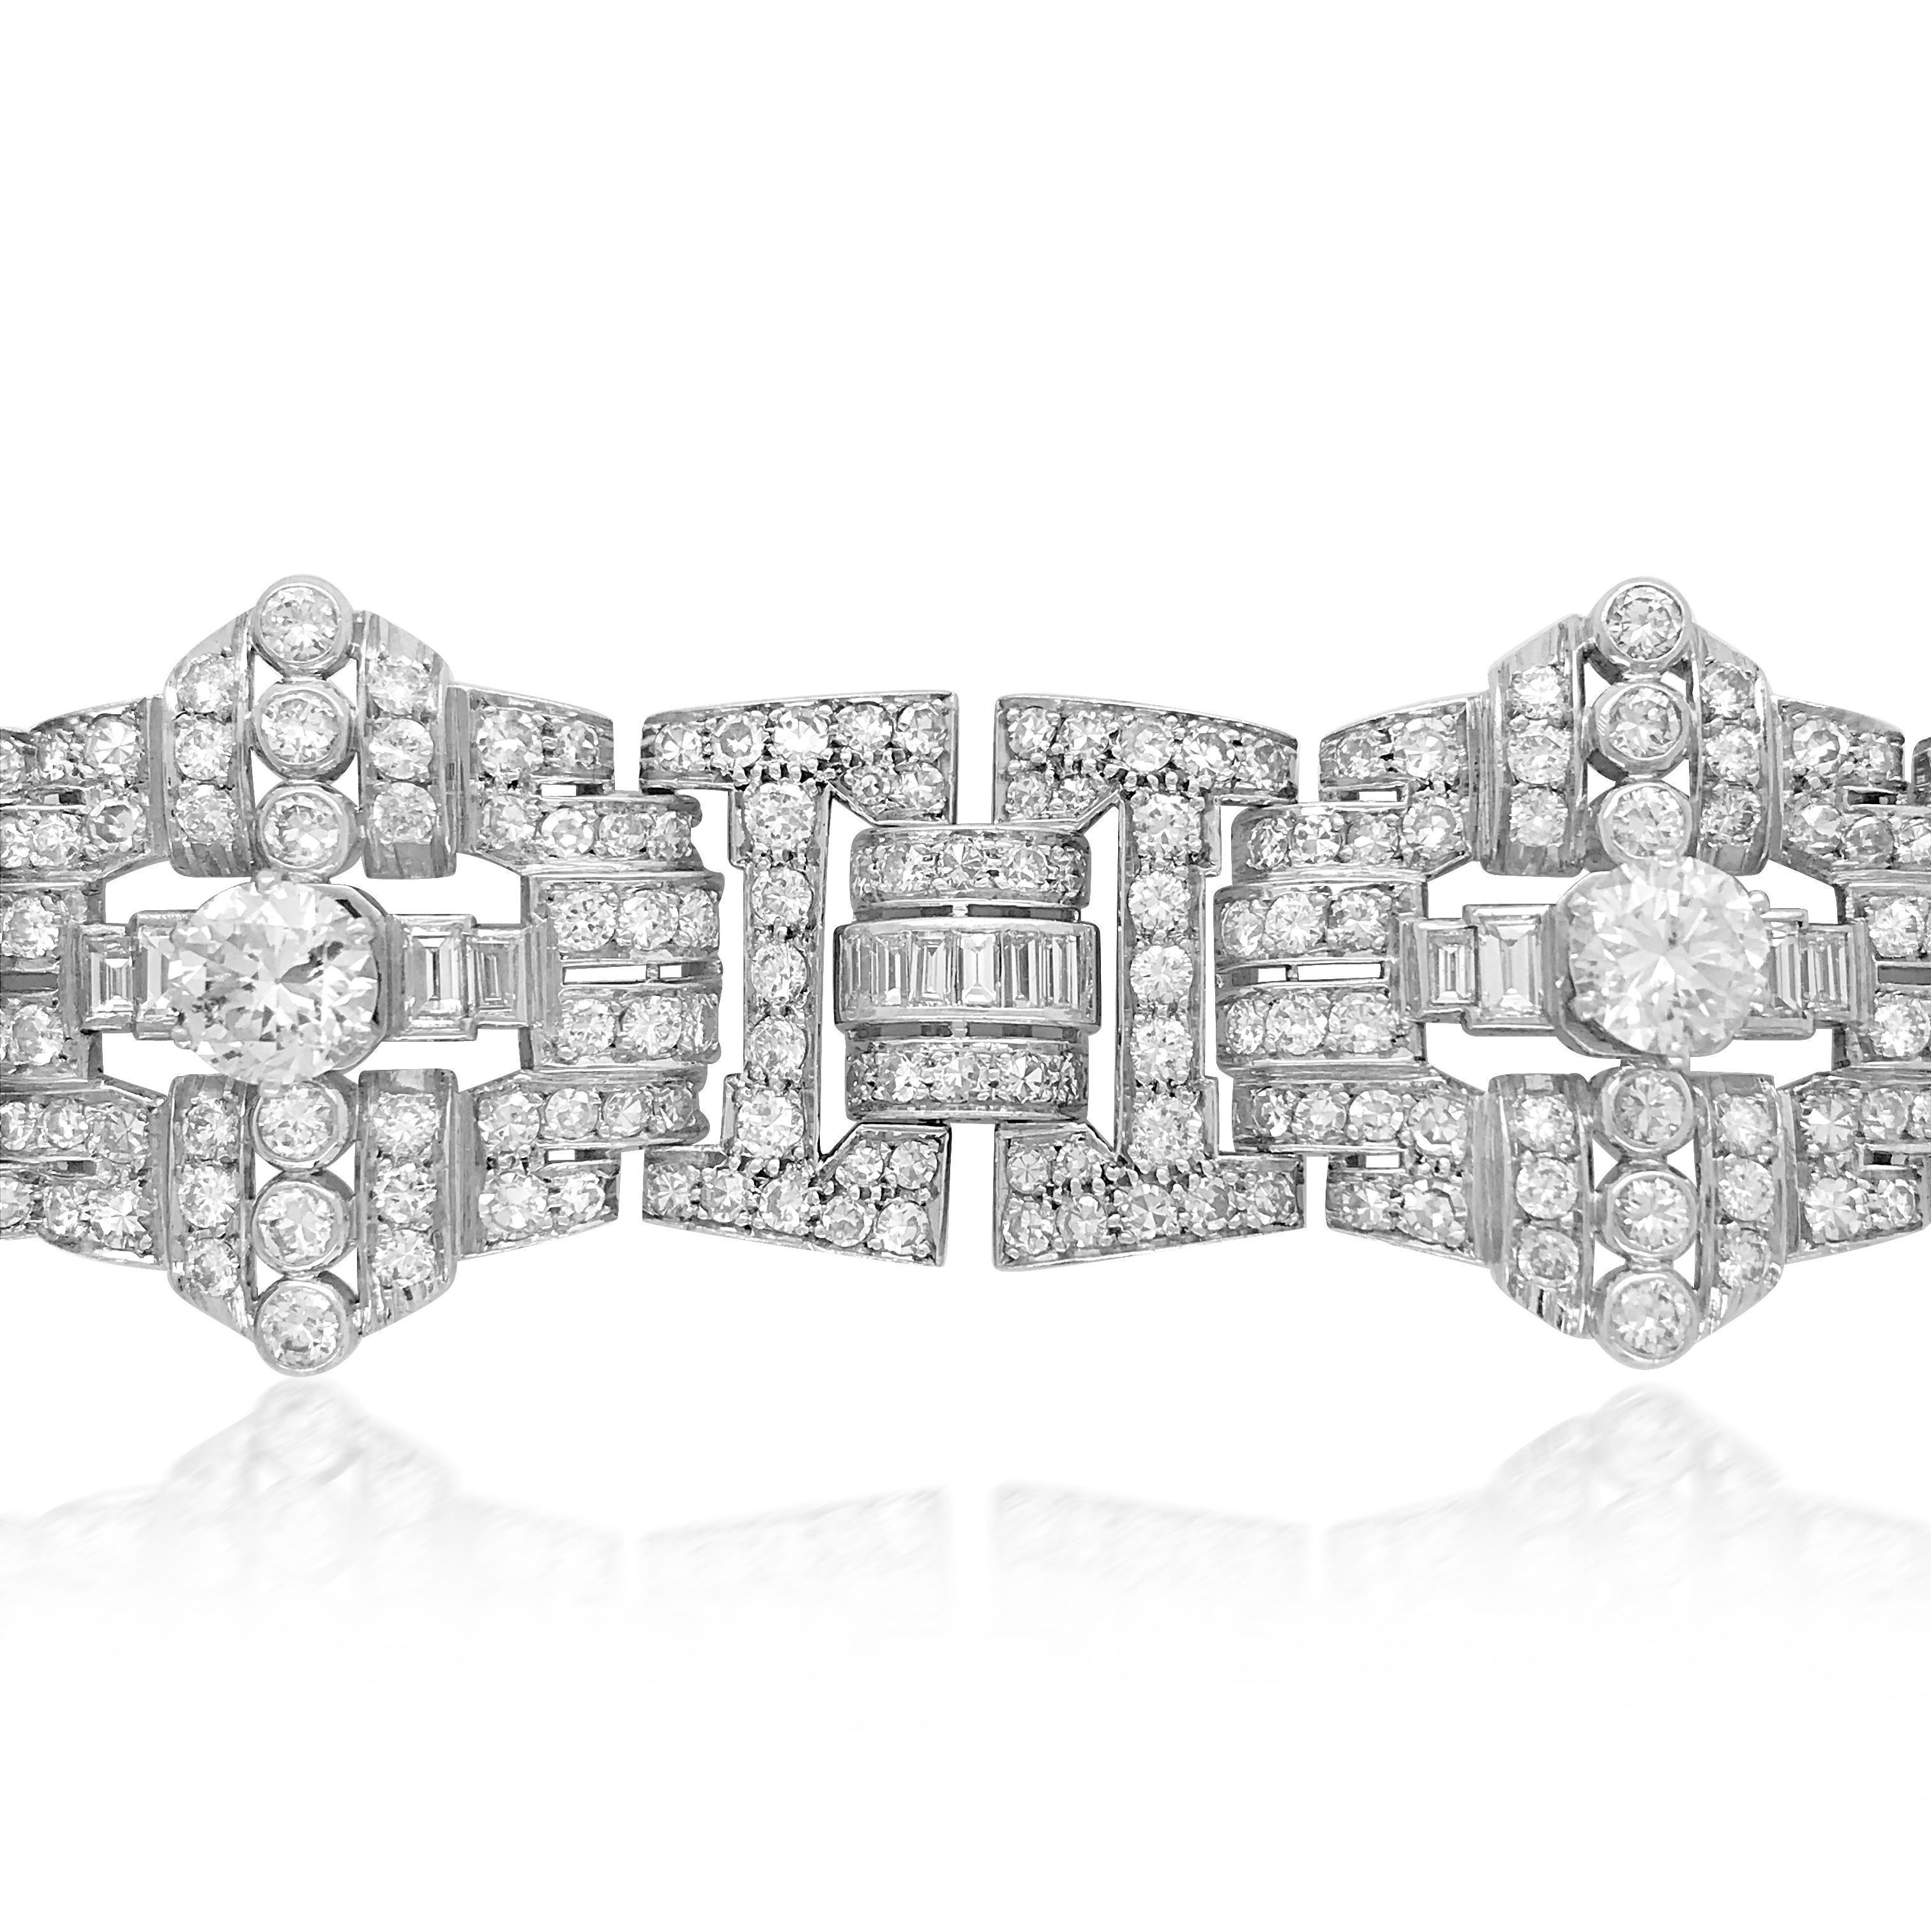 Women's Art Deco Style Platinum 41.2 Carat Diamond Bracelet